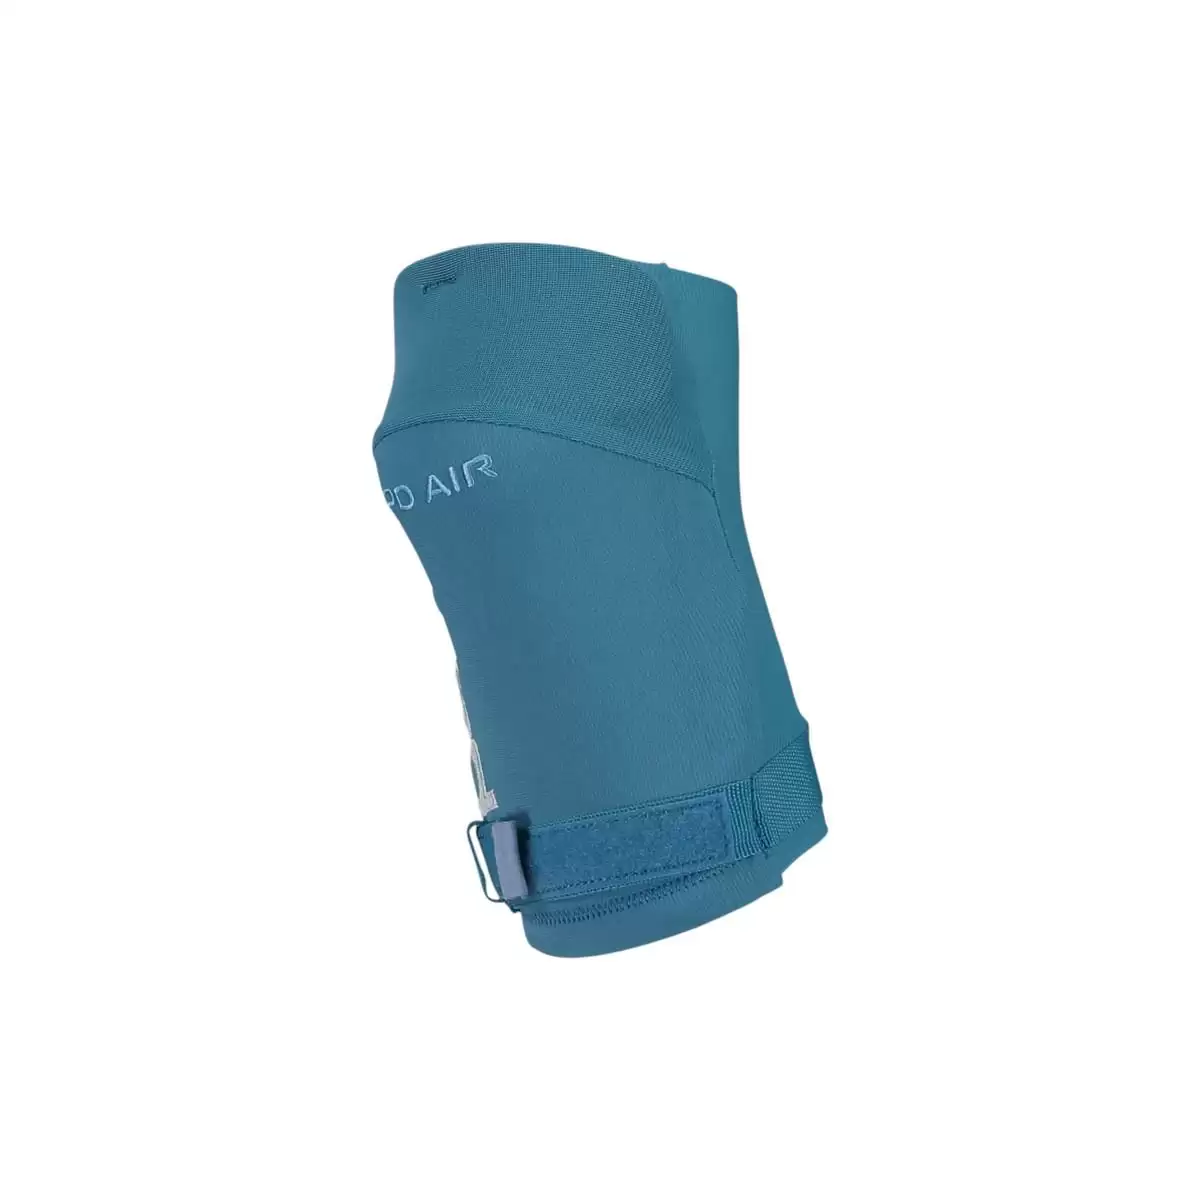 Joint VPD Air Elbow Protectors Basalt Blue Size S #1